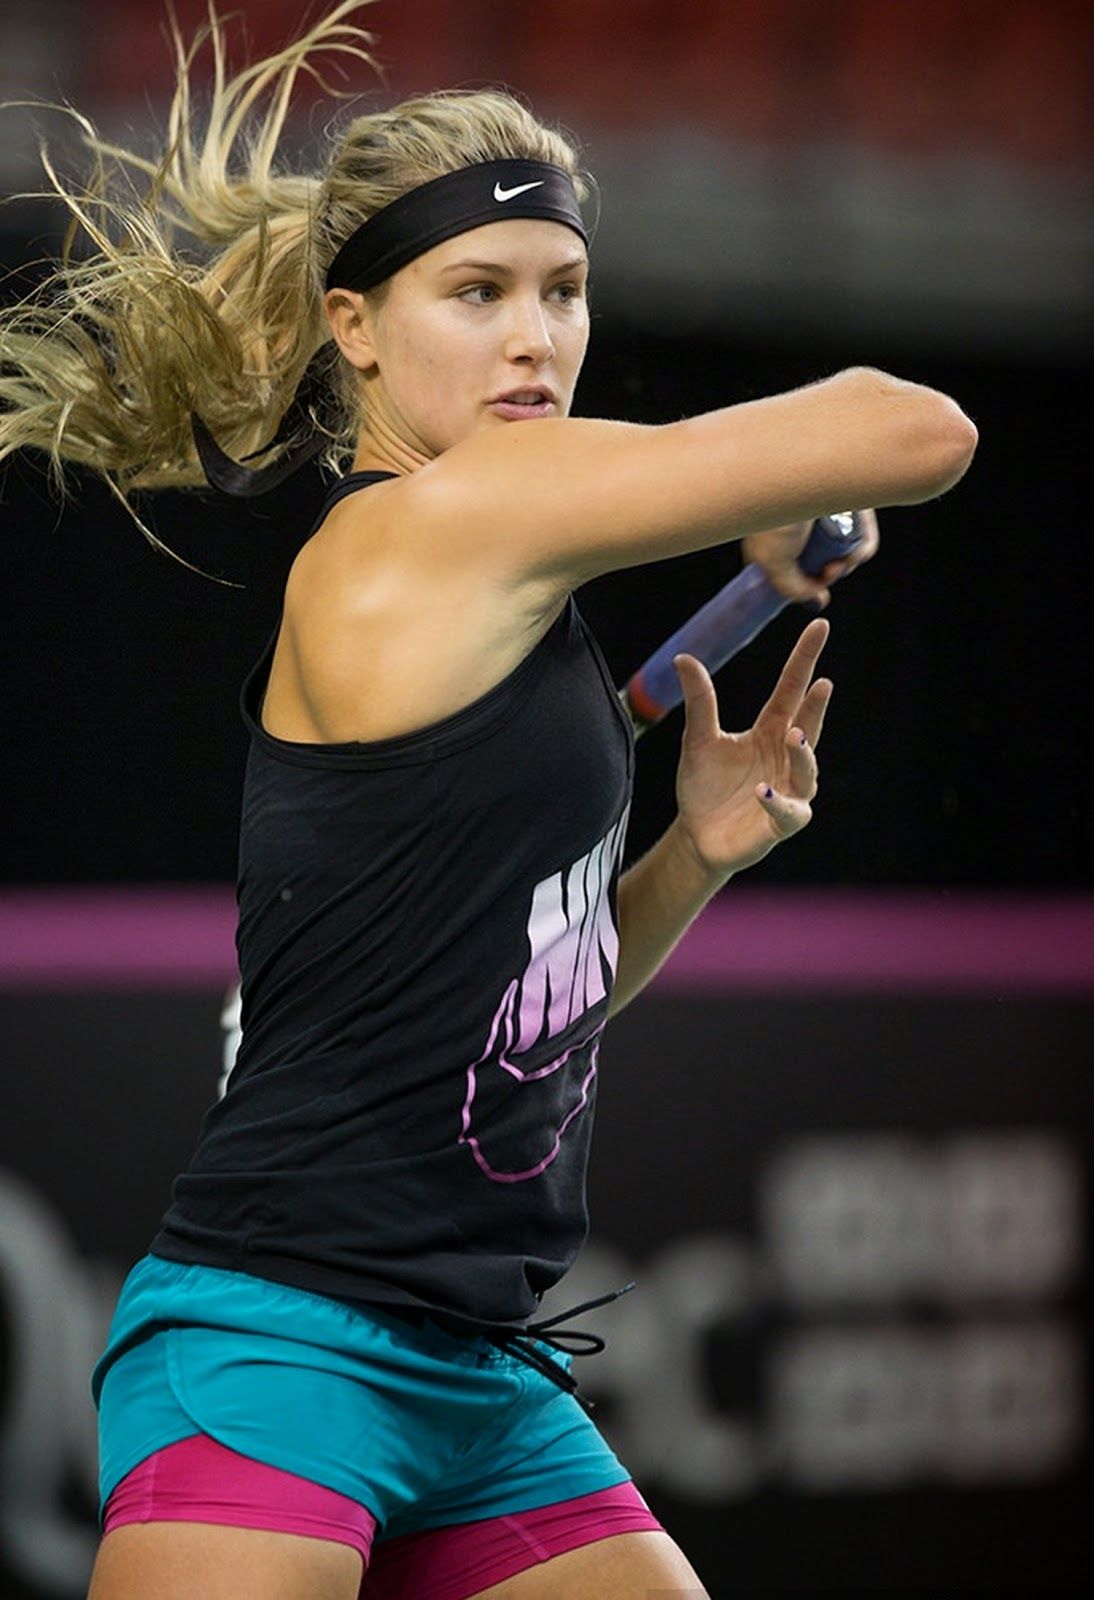 Wallpapper: Canadian Tennis Star Eugenie Bouchard HD Wallpaper. HD Picture of Eugenie Bouchard